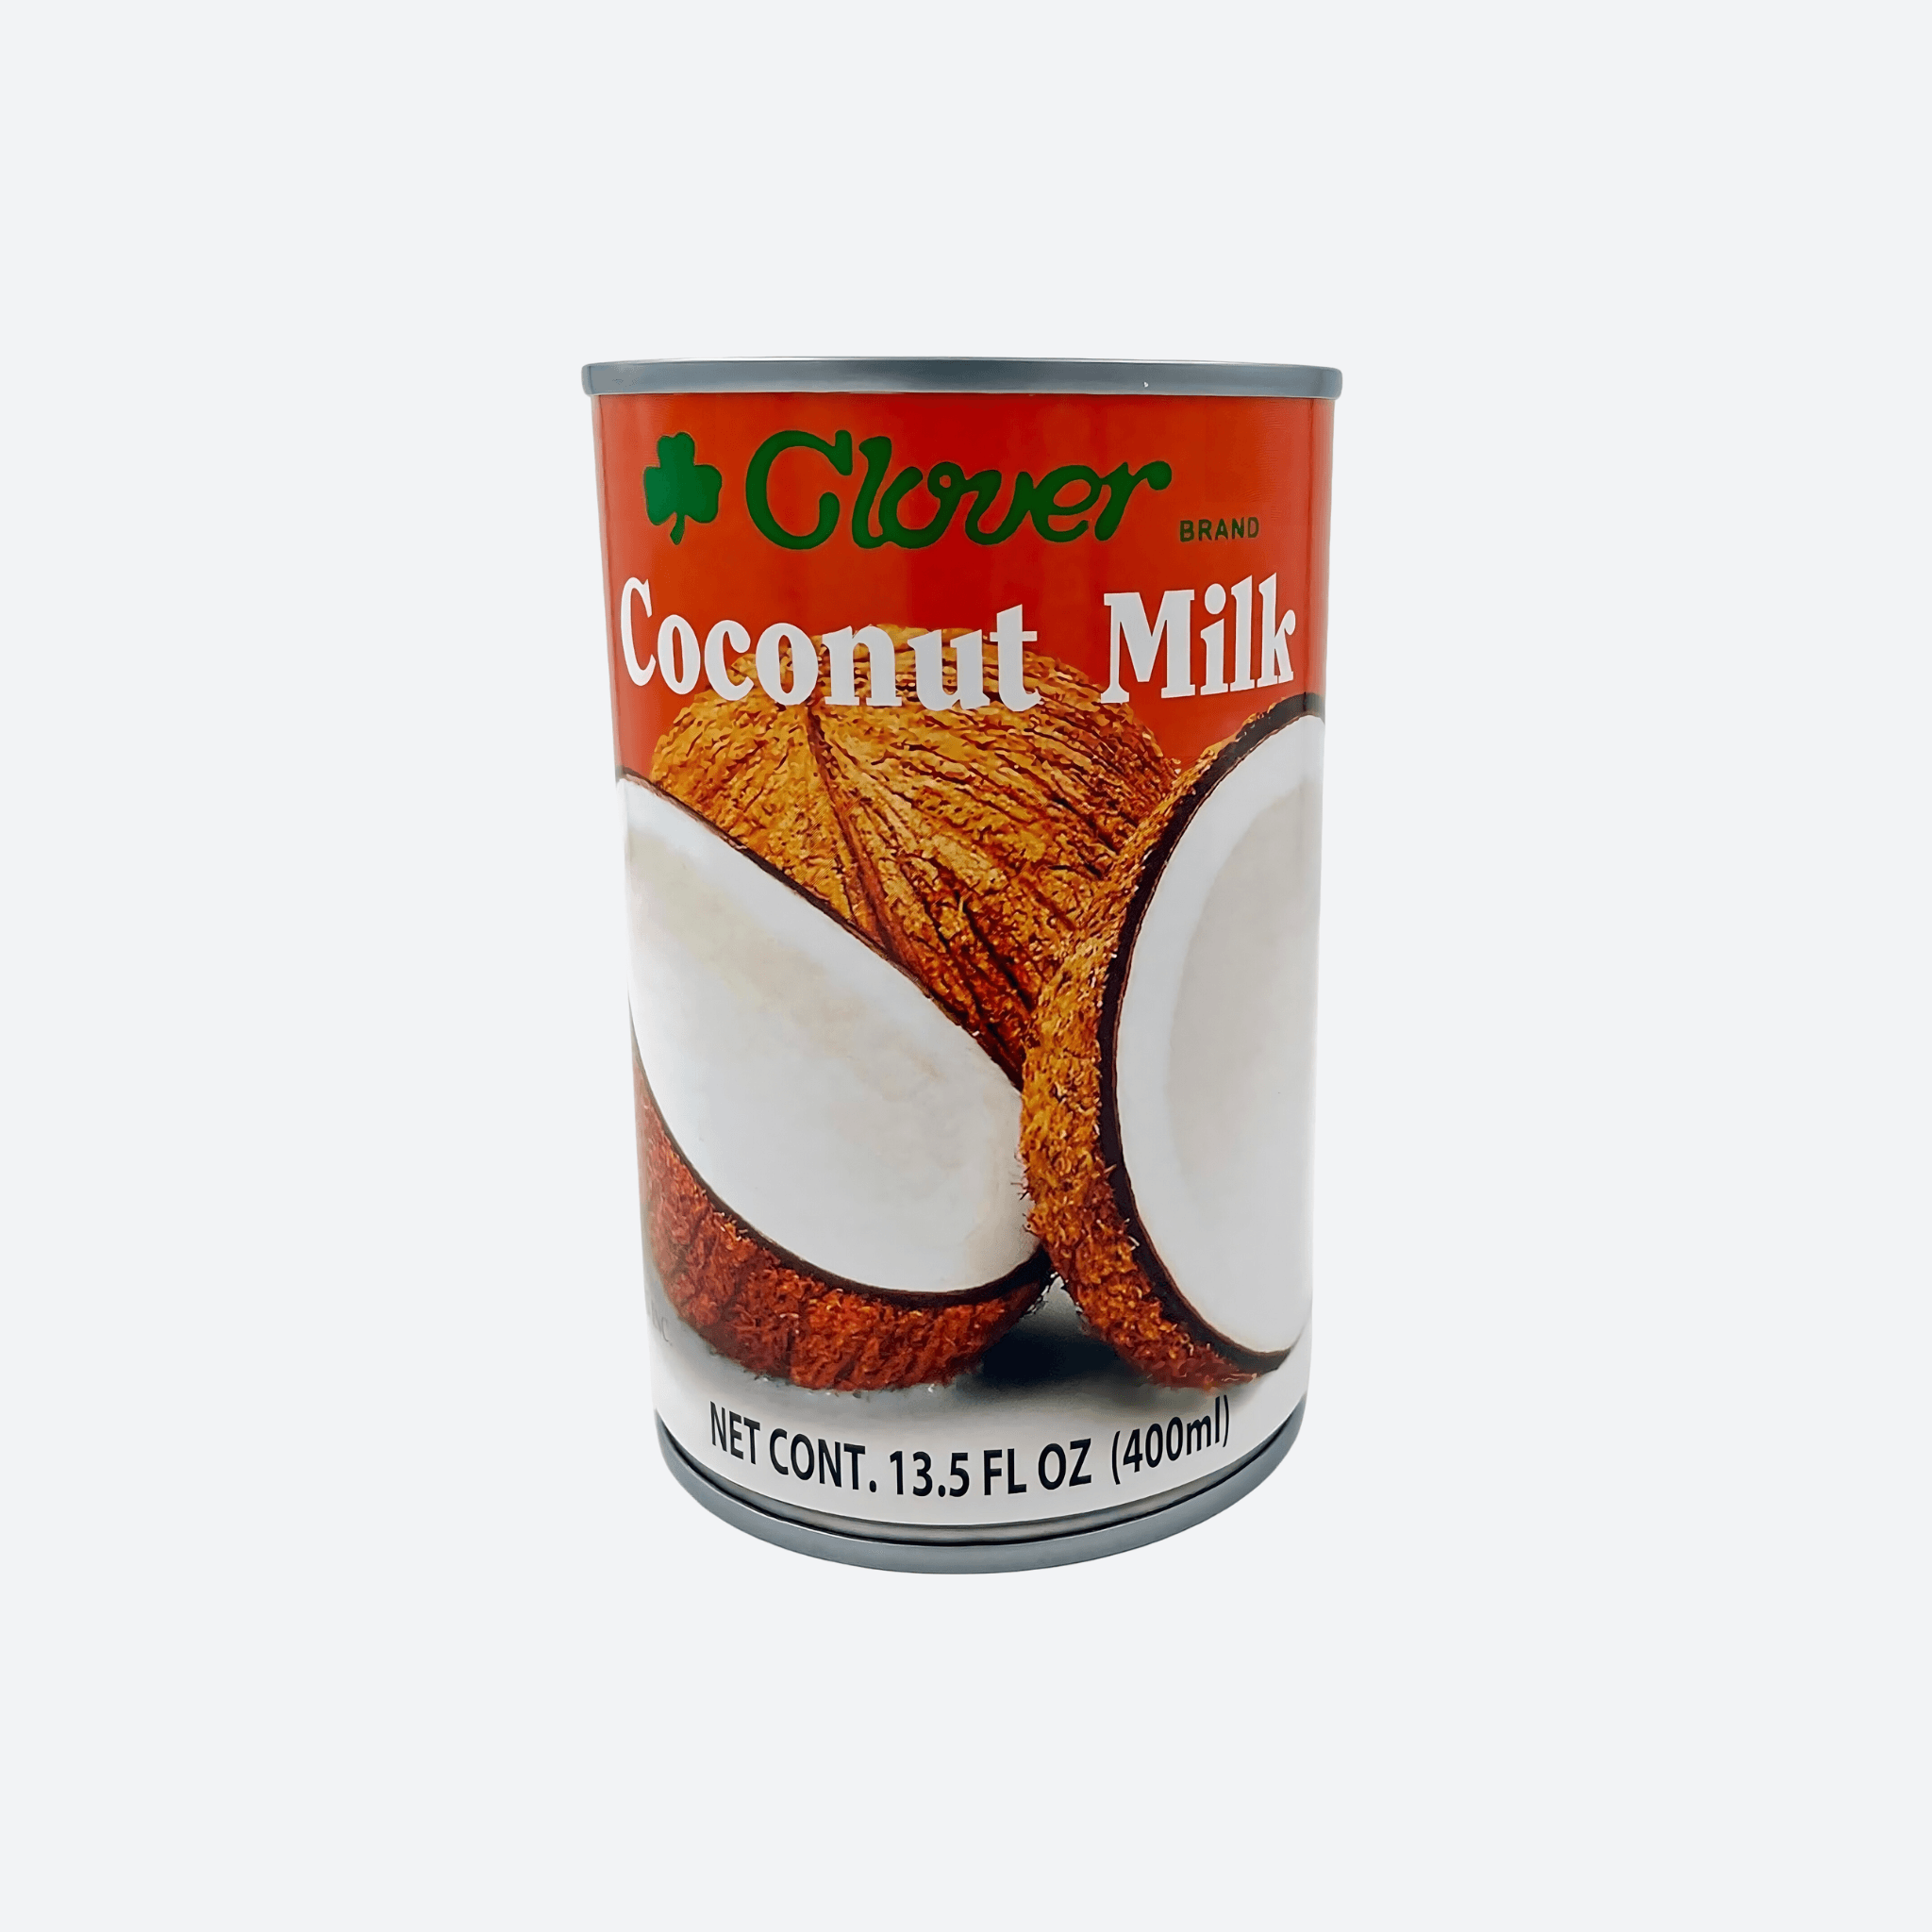 Goya Coconut Milk Leche de Coco 13.5oz Can